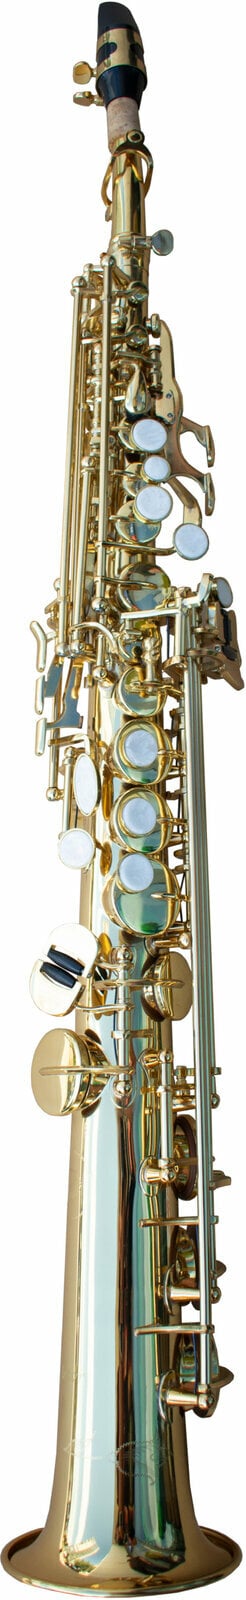 Soprano saxophone Victory VSS Student 02 Soprano saxophone (Just unboxed)